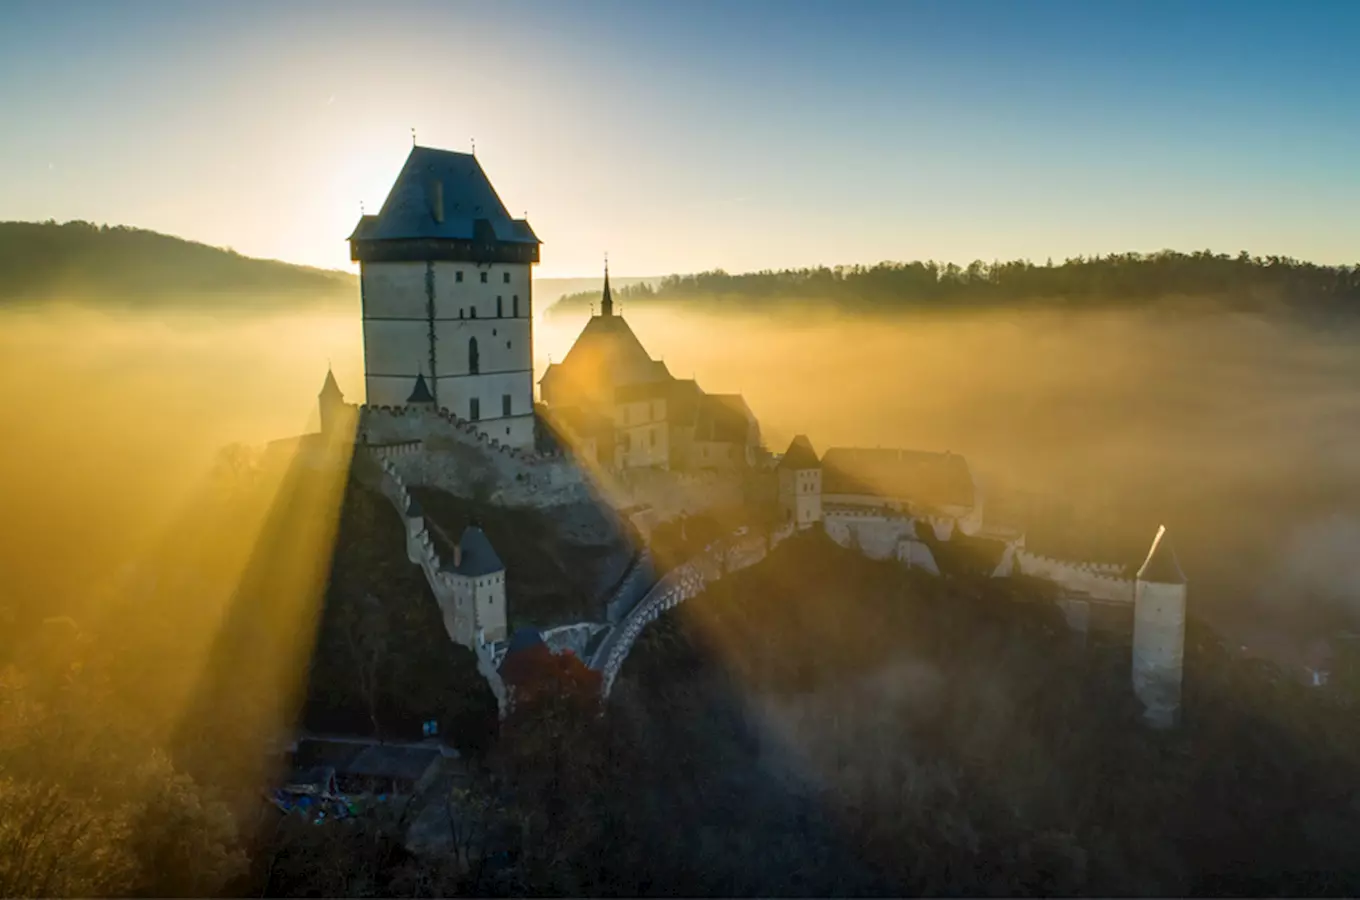 Vydejte se na výlet na hrad či zámek v okolí Prahy už v březnu